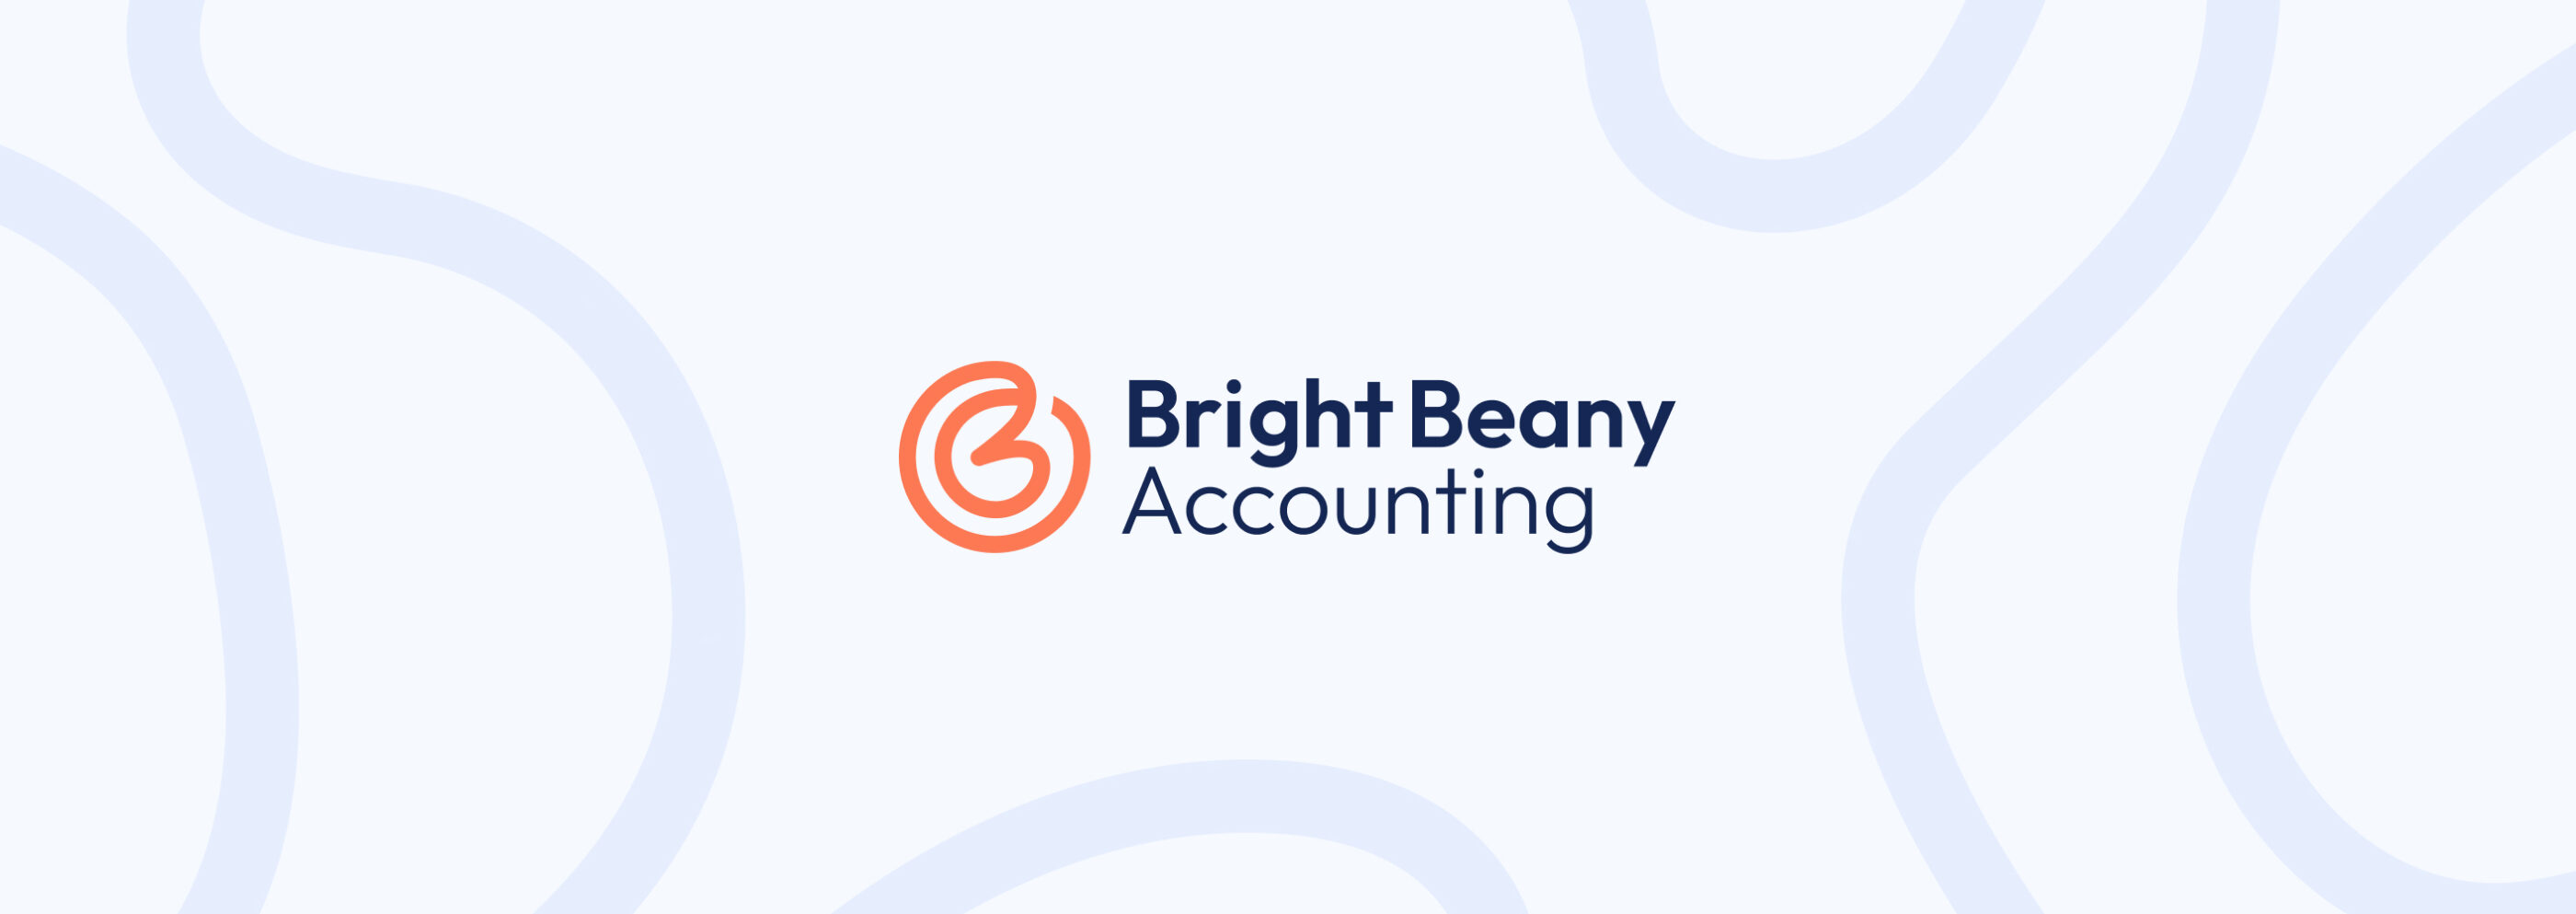 Bright Beany logo Hero Desktop